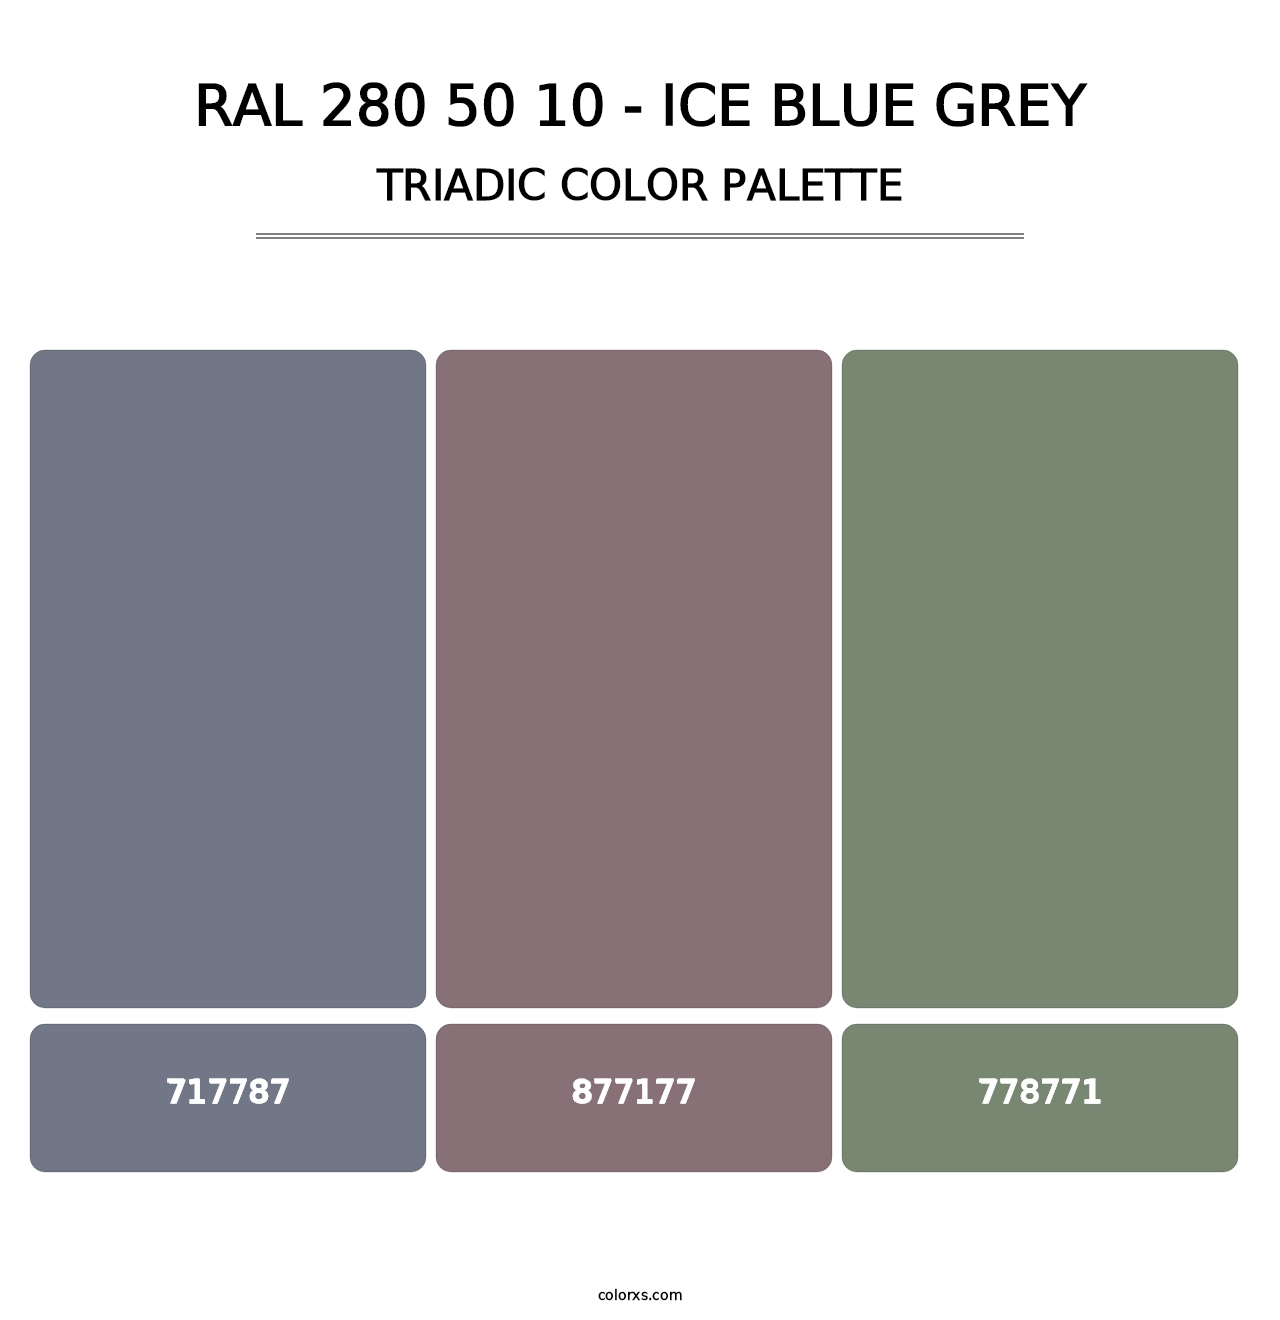 RAL 280 50 10 - Ice Blue Grey - Triadic Color Palette